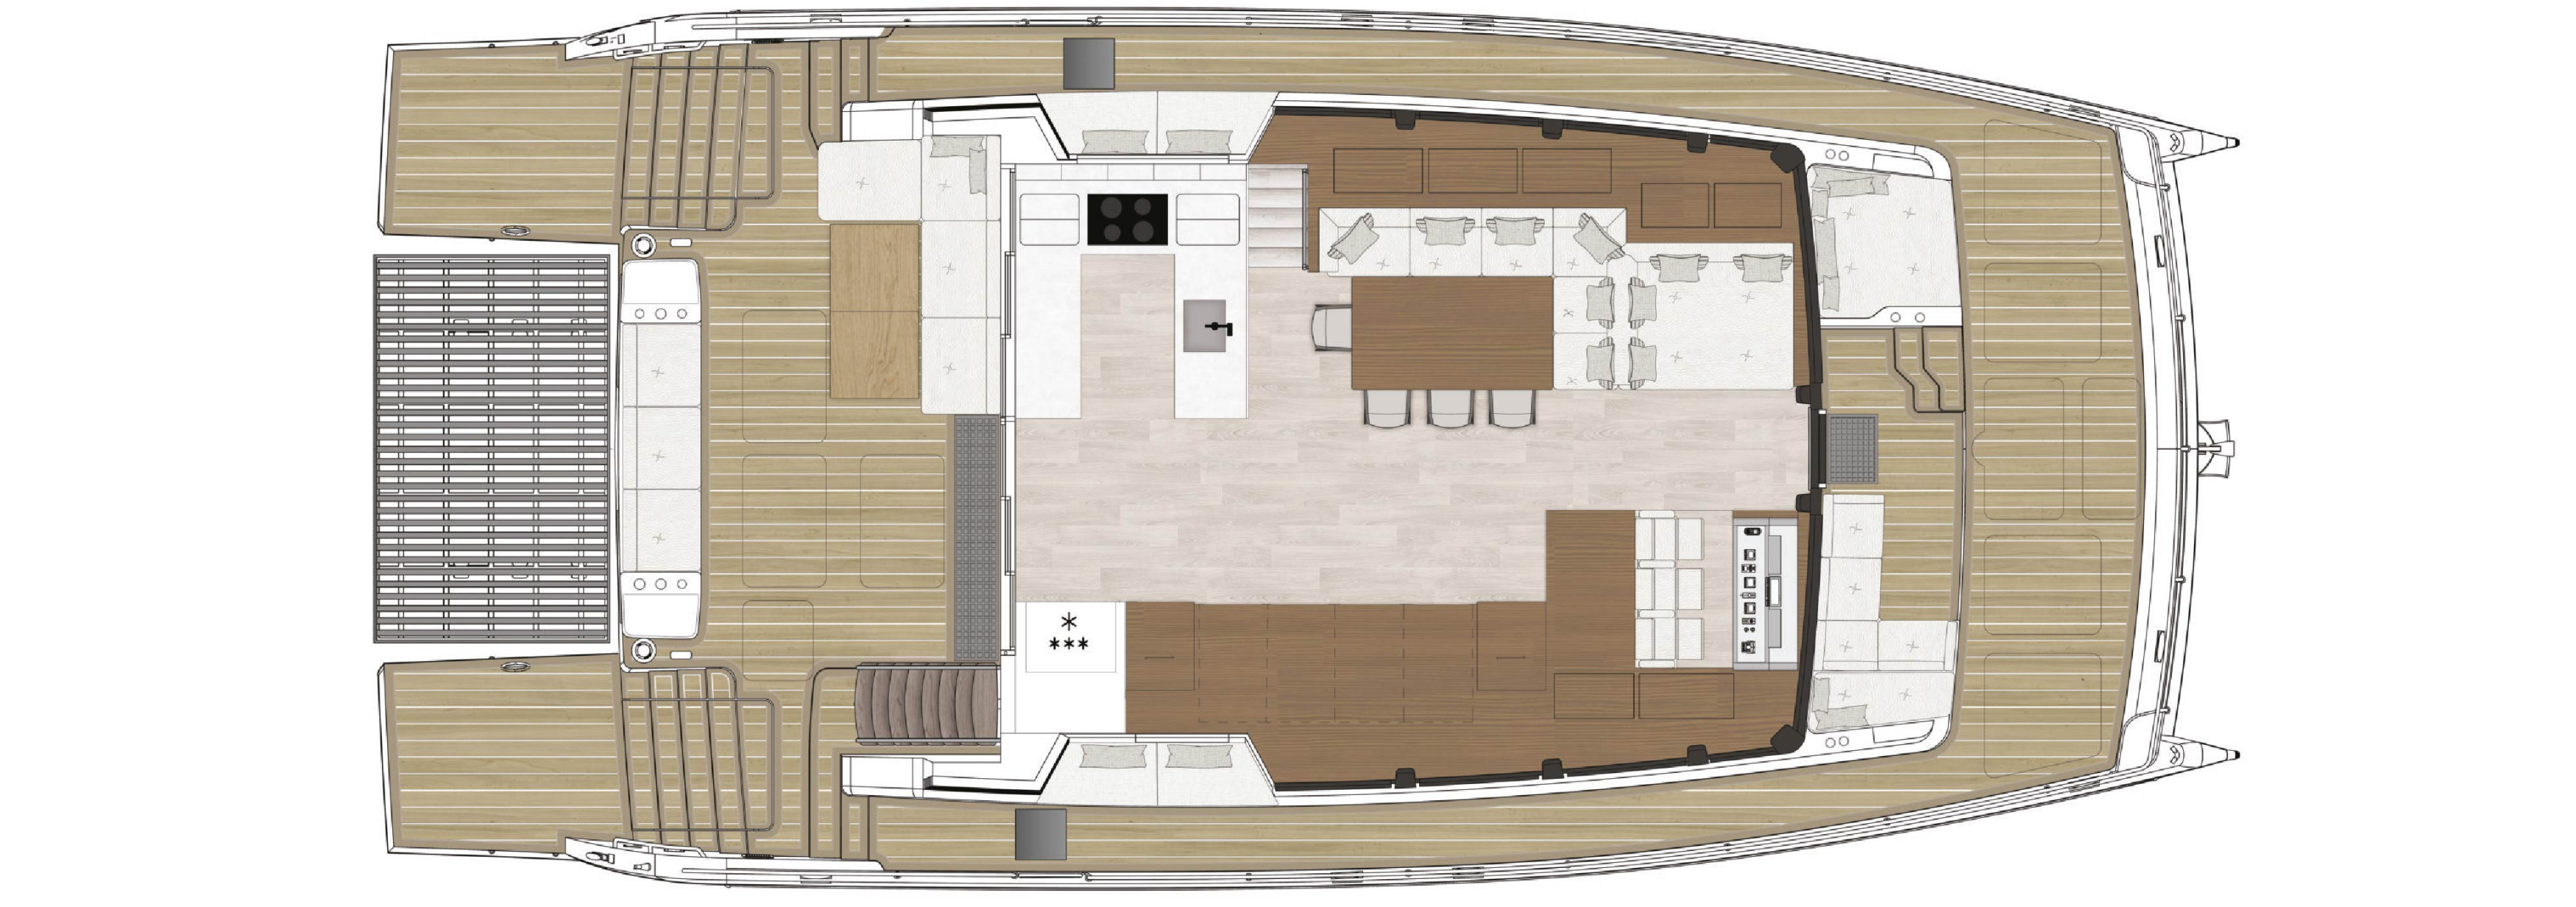 Yacht main deck front exit plan